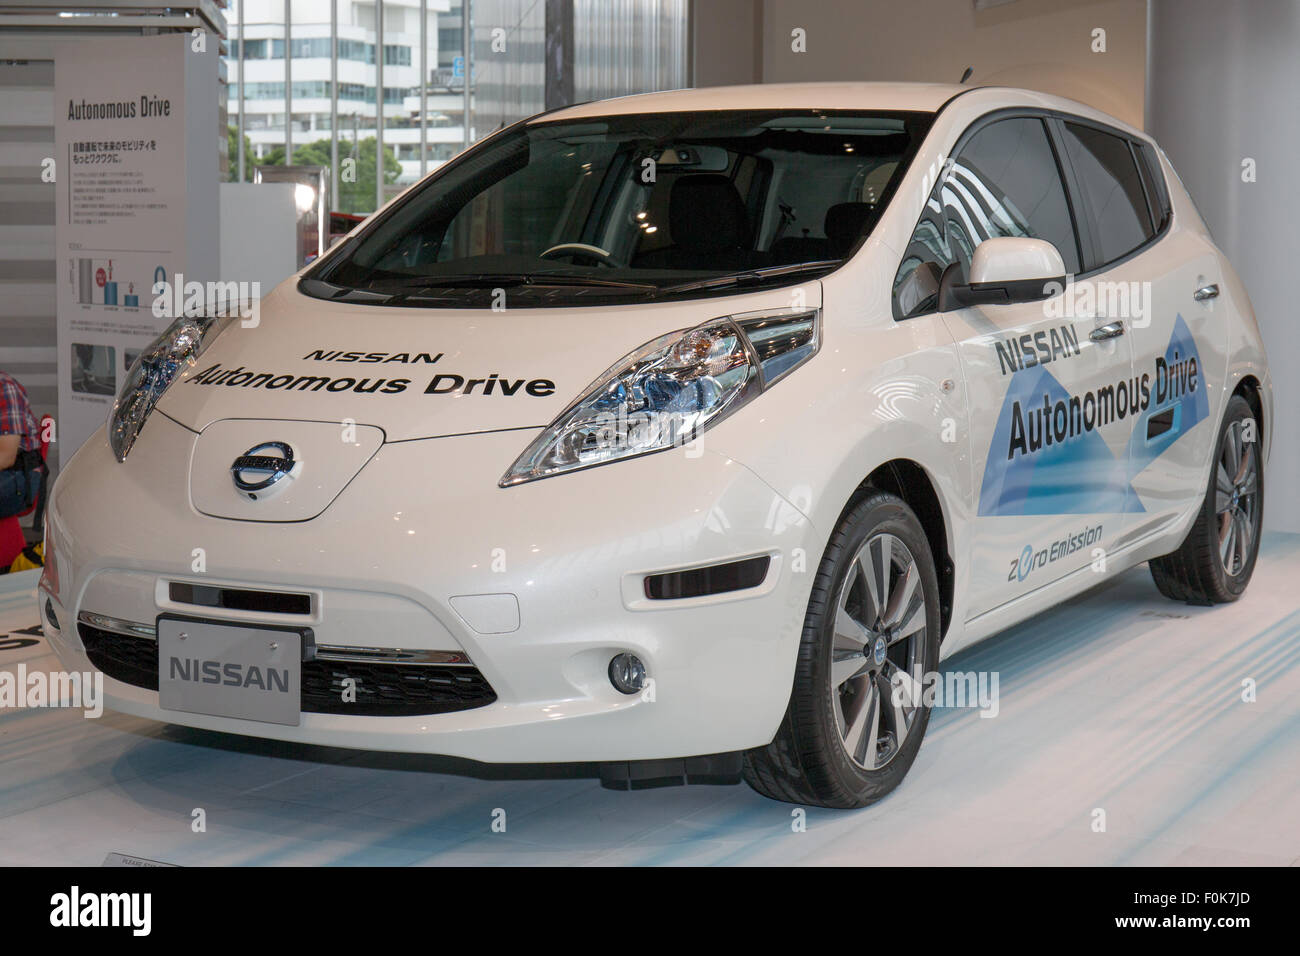 Nissan autonomen Fahren vorne links 2015 Nissan Global Headquarters Gallery Stockfoto